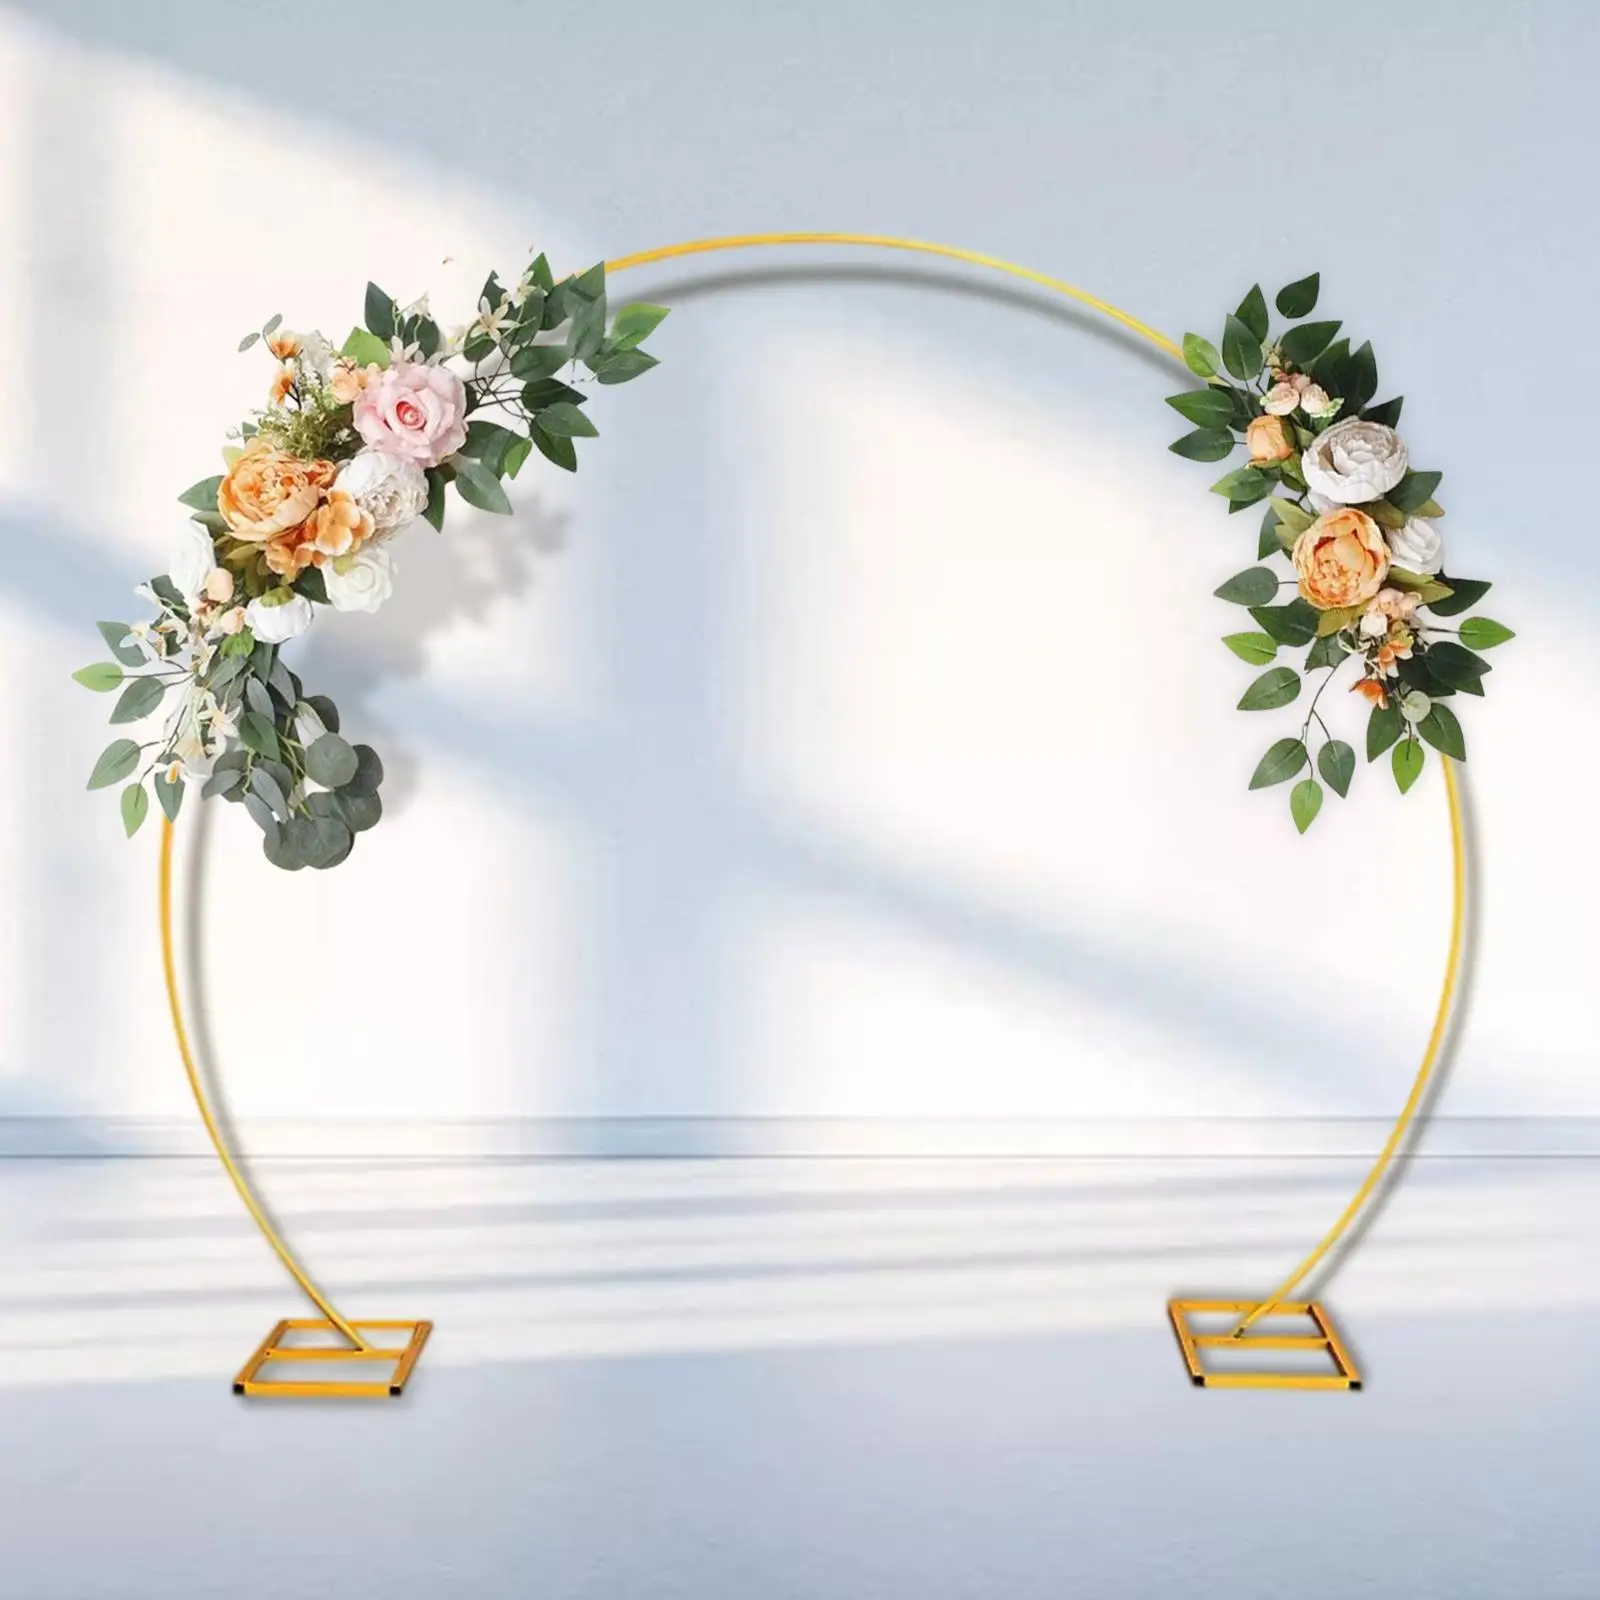 2x Silk Wedding Arch Flowers Centerpieces Kit Welcome Corner Home Decor